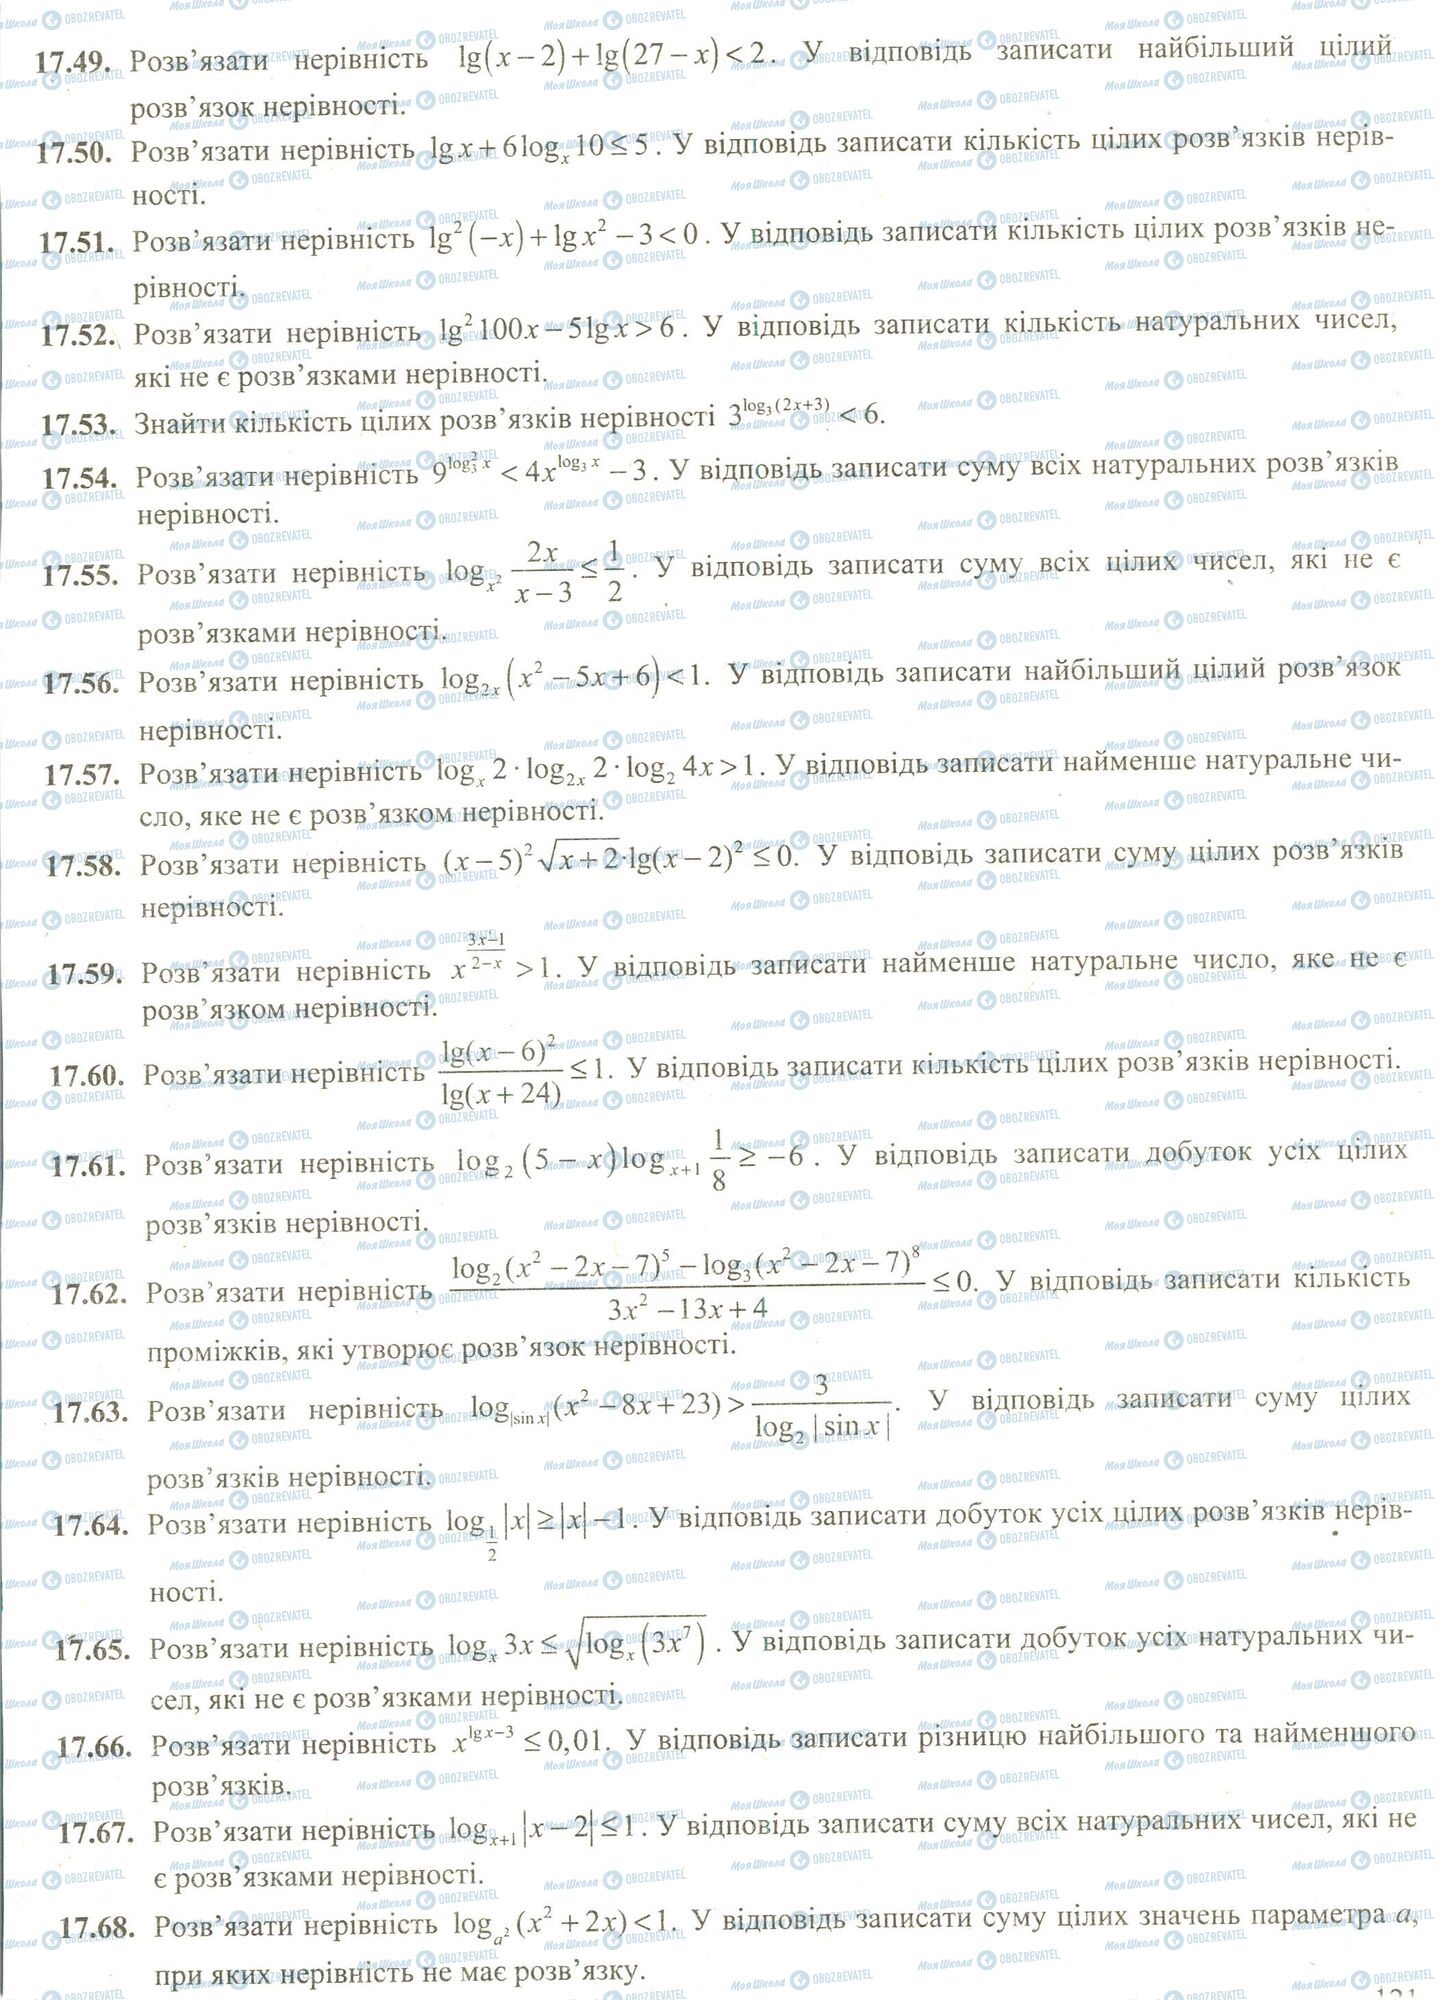 ЗНО Математика 11 класс страница 49-68